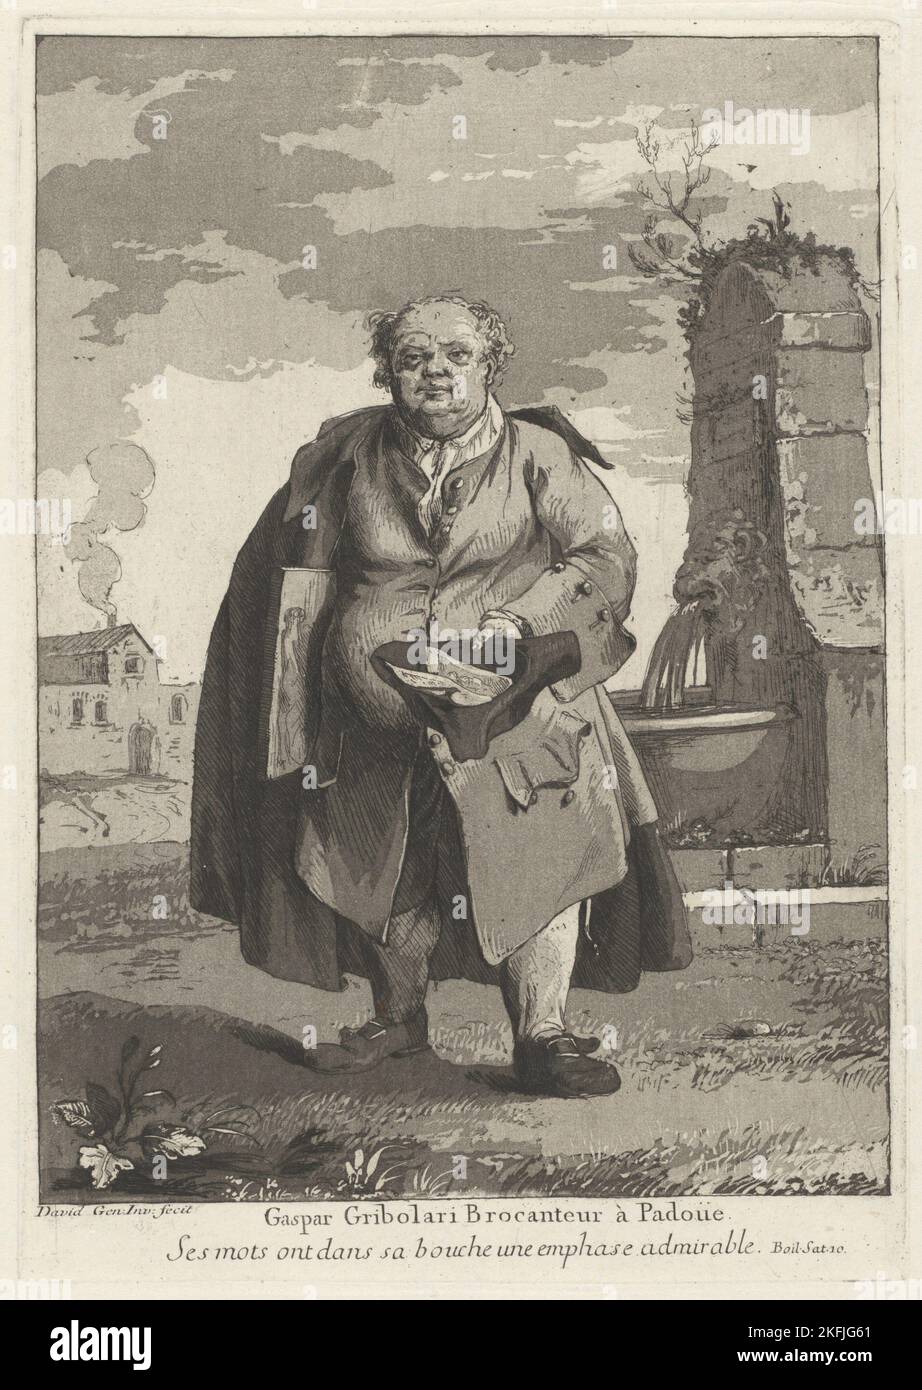 Gaspar Gribolari brocanteur &#xe0; Padoue (Gaspar Gribolari, Second-Hand Dealer in Padua), 1775. Stock Photo